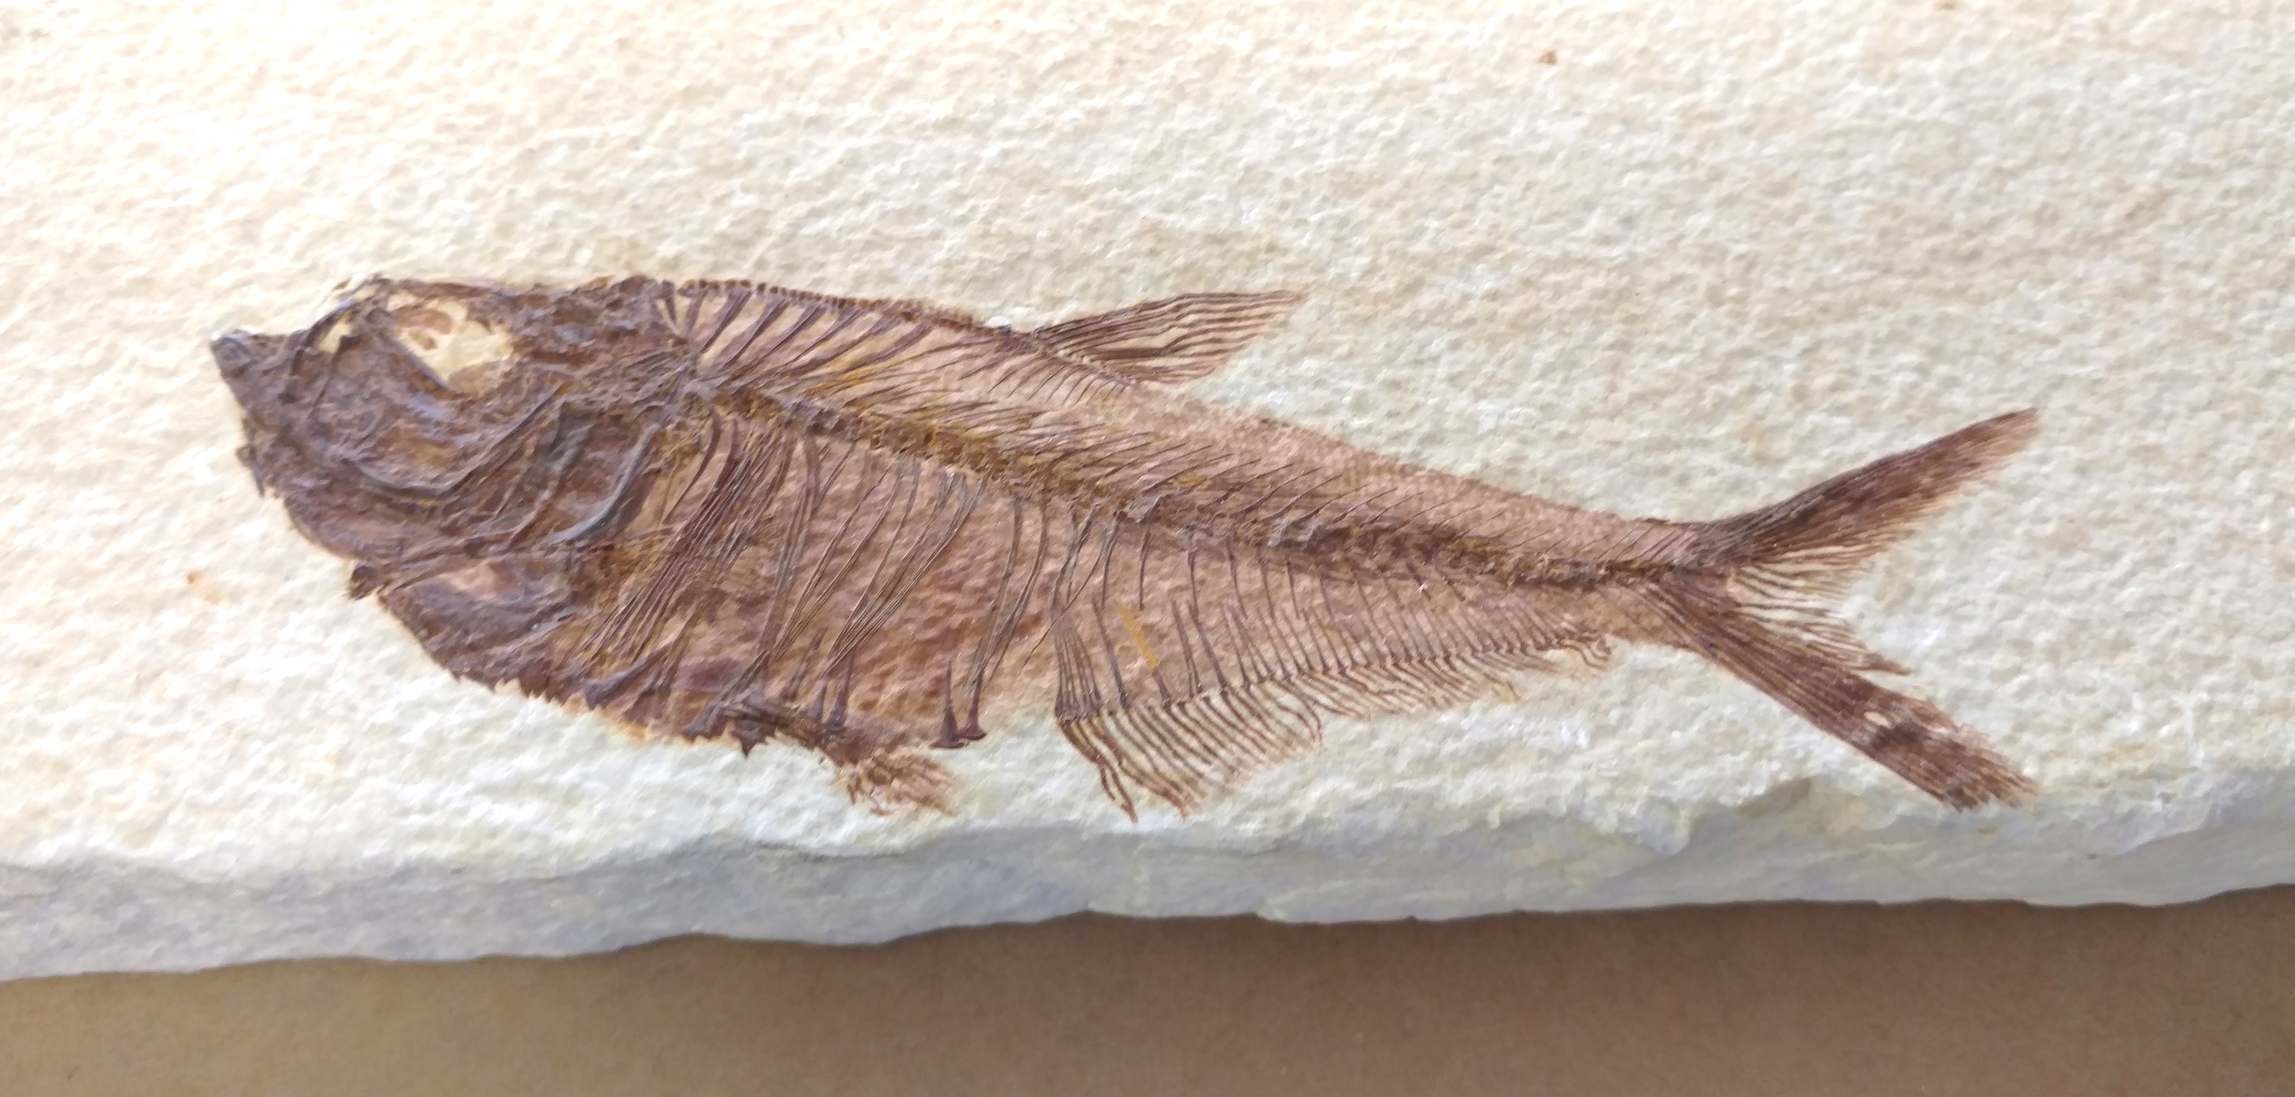 Green River Fish Fossil — The Jewel